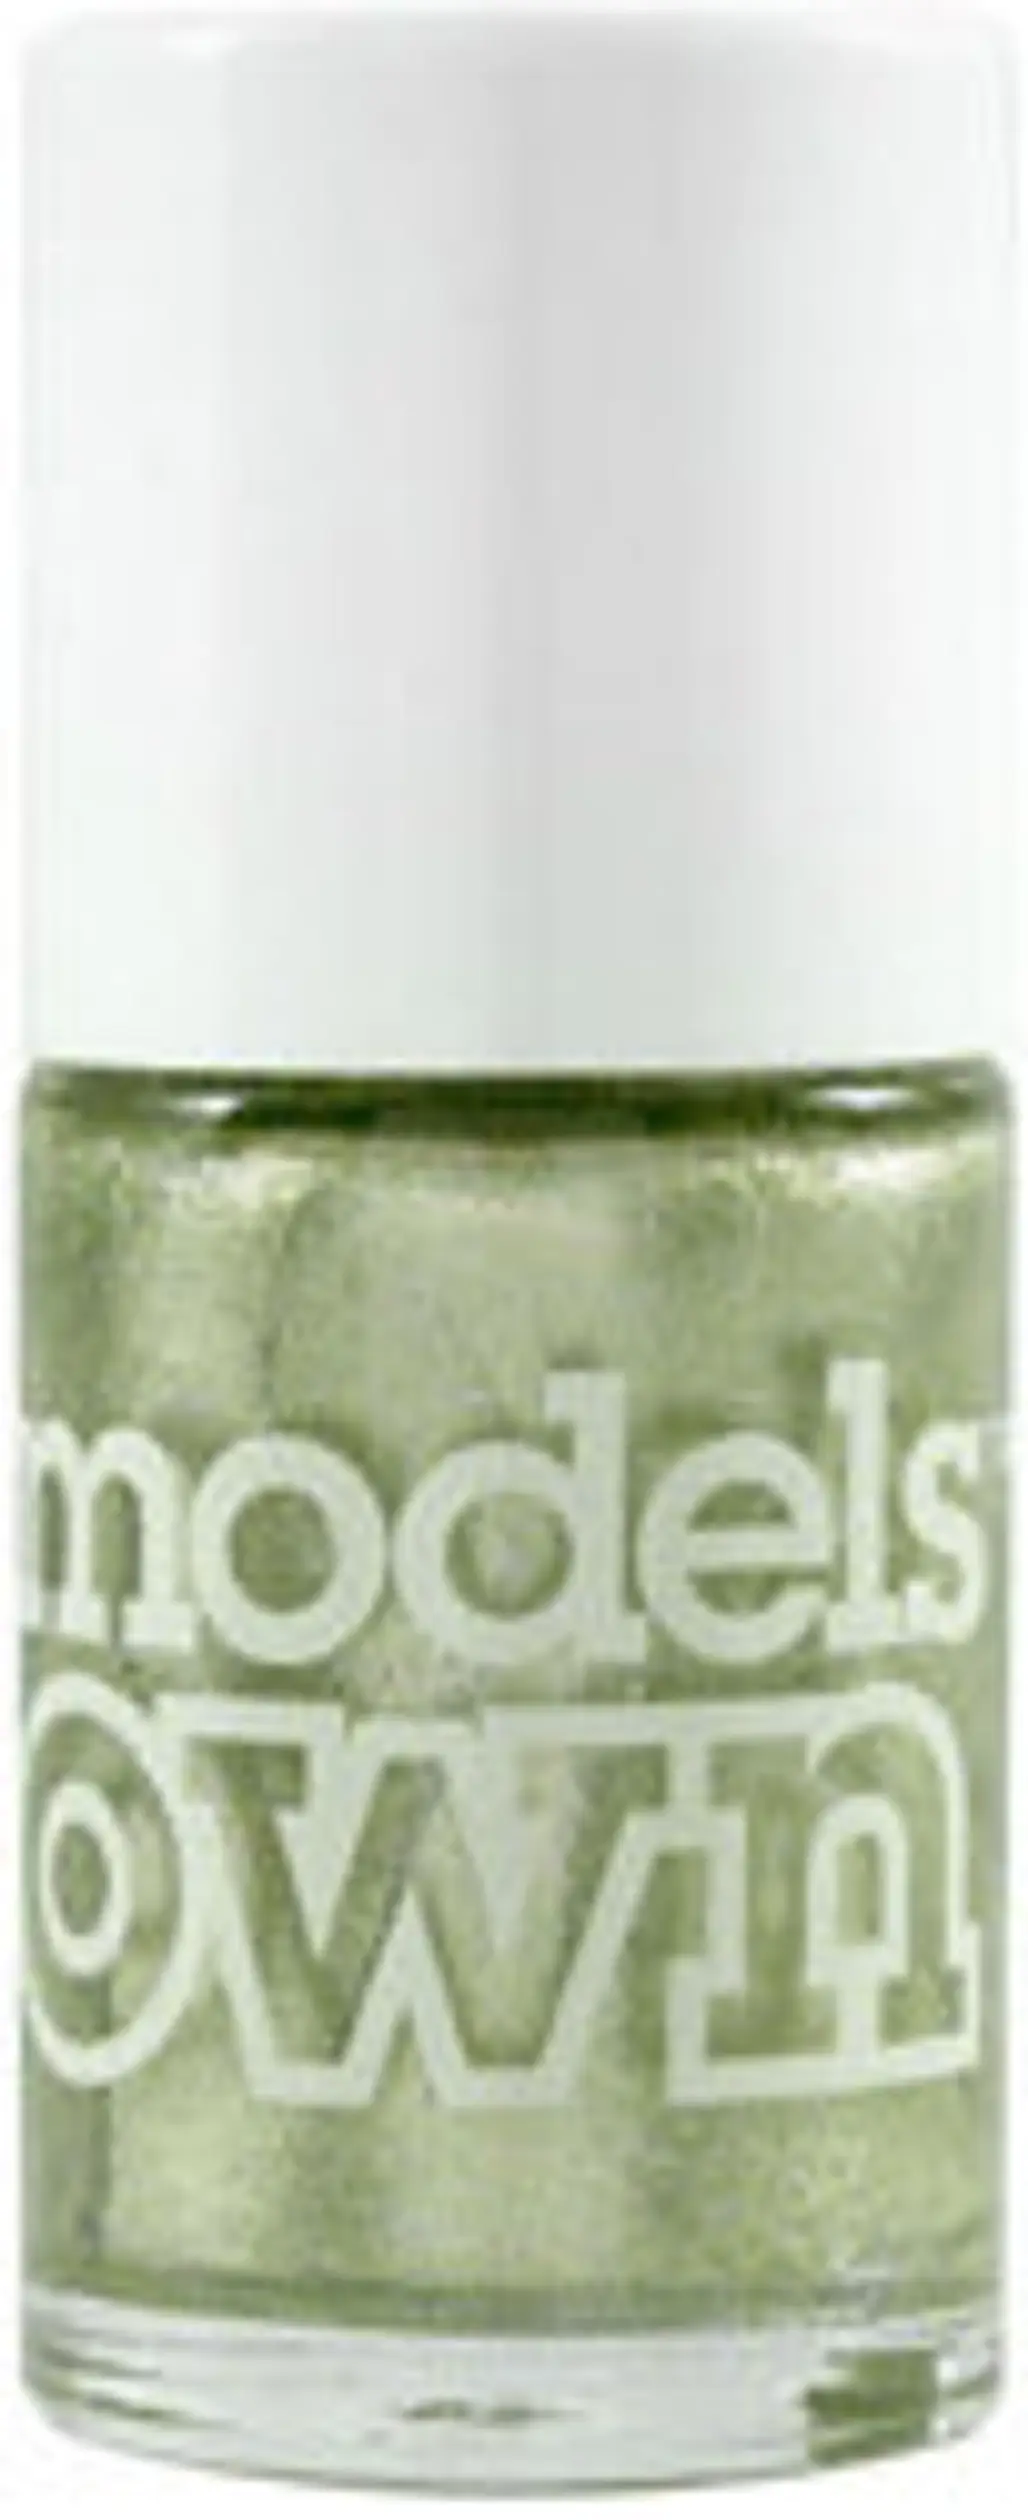 Models Own Shimmer Metallic Nail Polish in ‘Green Flash’